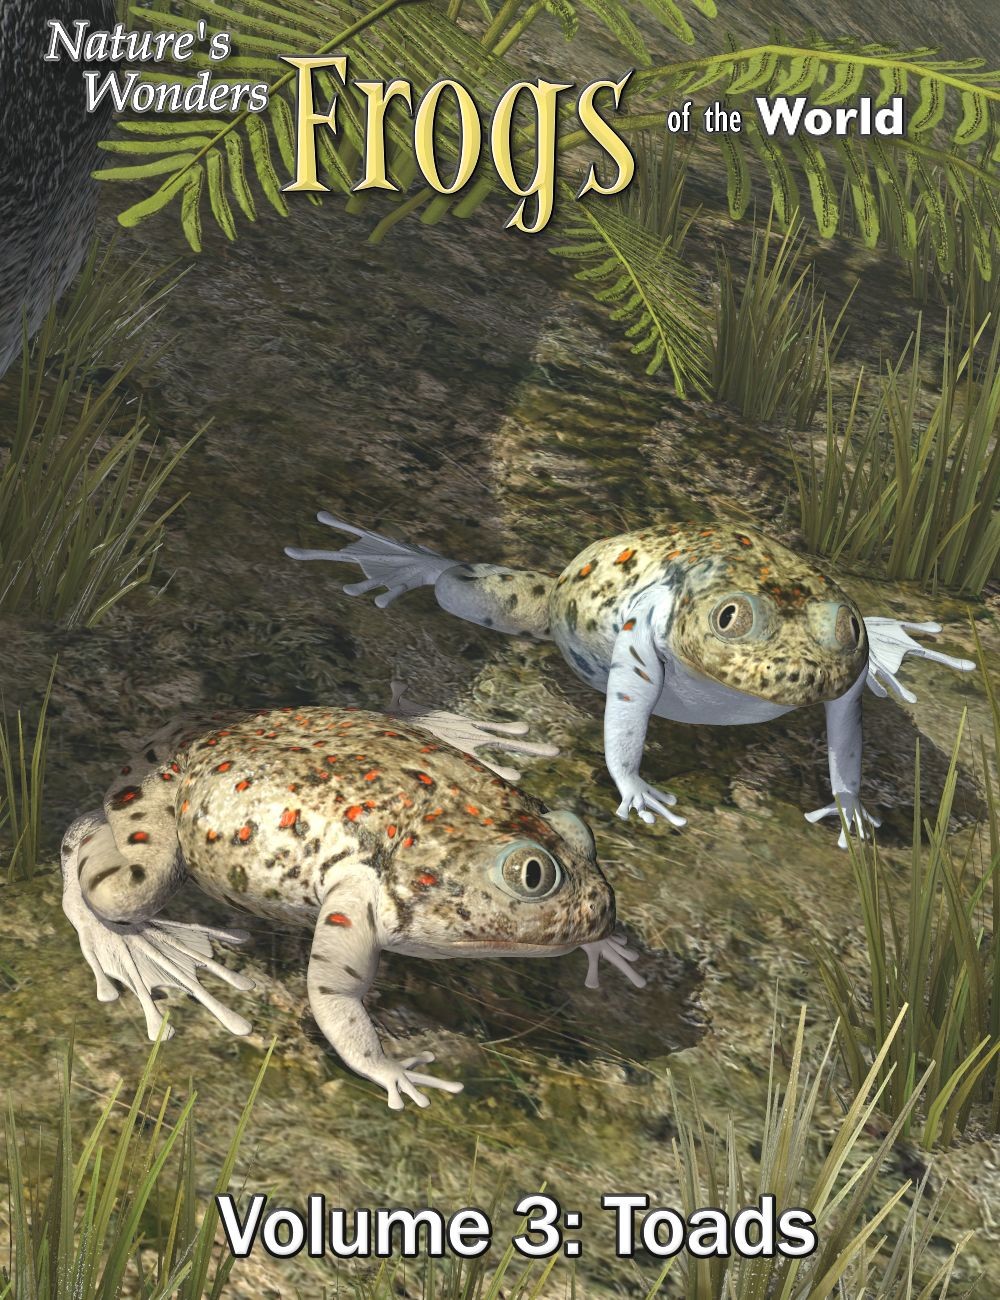 11642-nature-s-wonders-frogs-of-the-world-vol-3-main.jpg